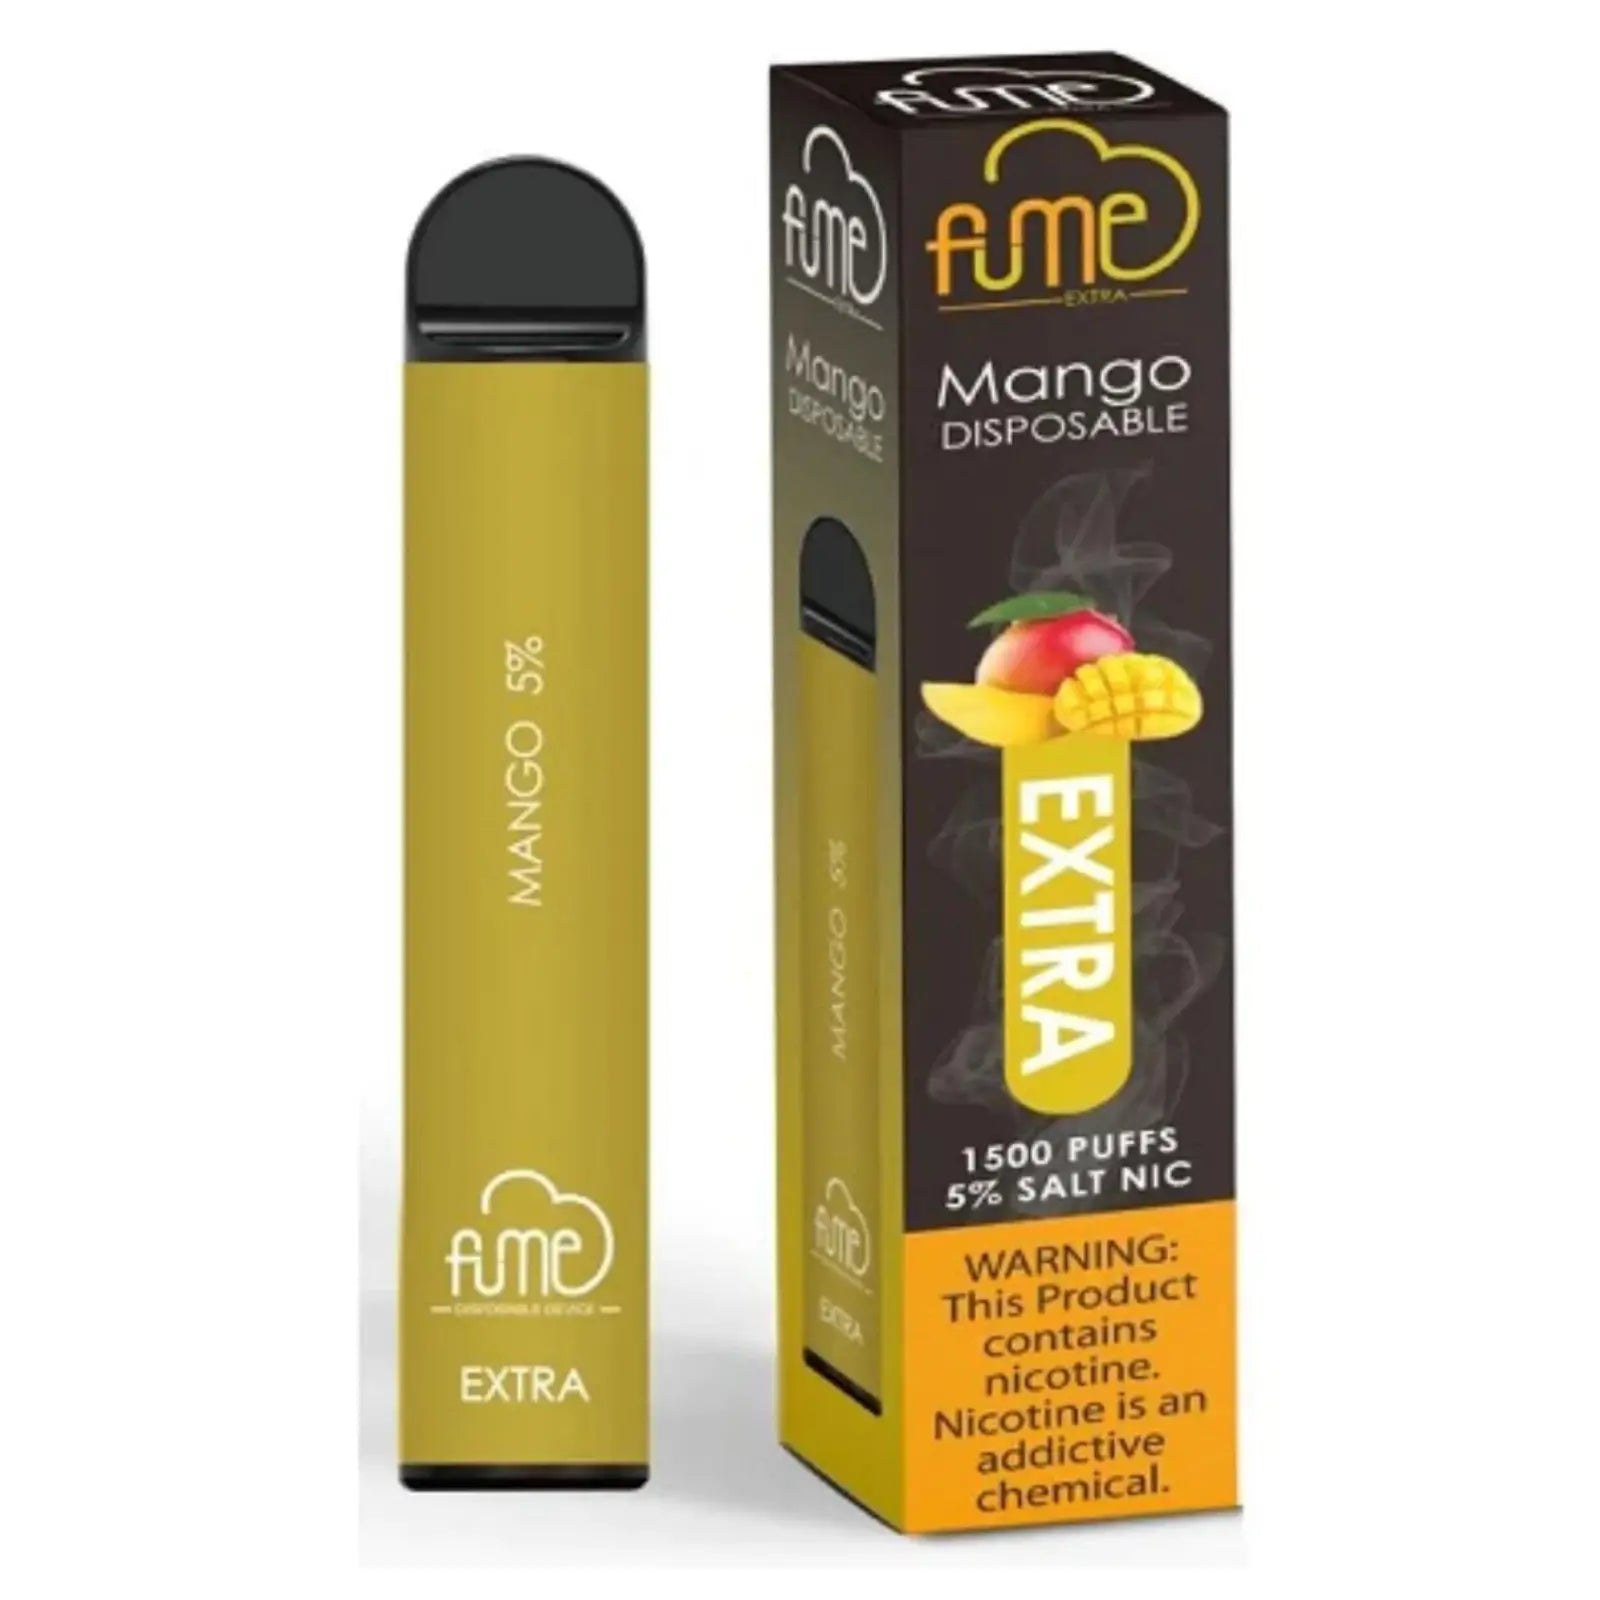 Fume Extra Disposable 1500 Puffs - Mango